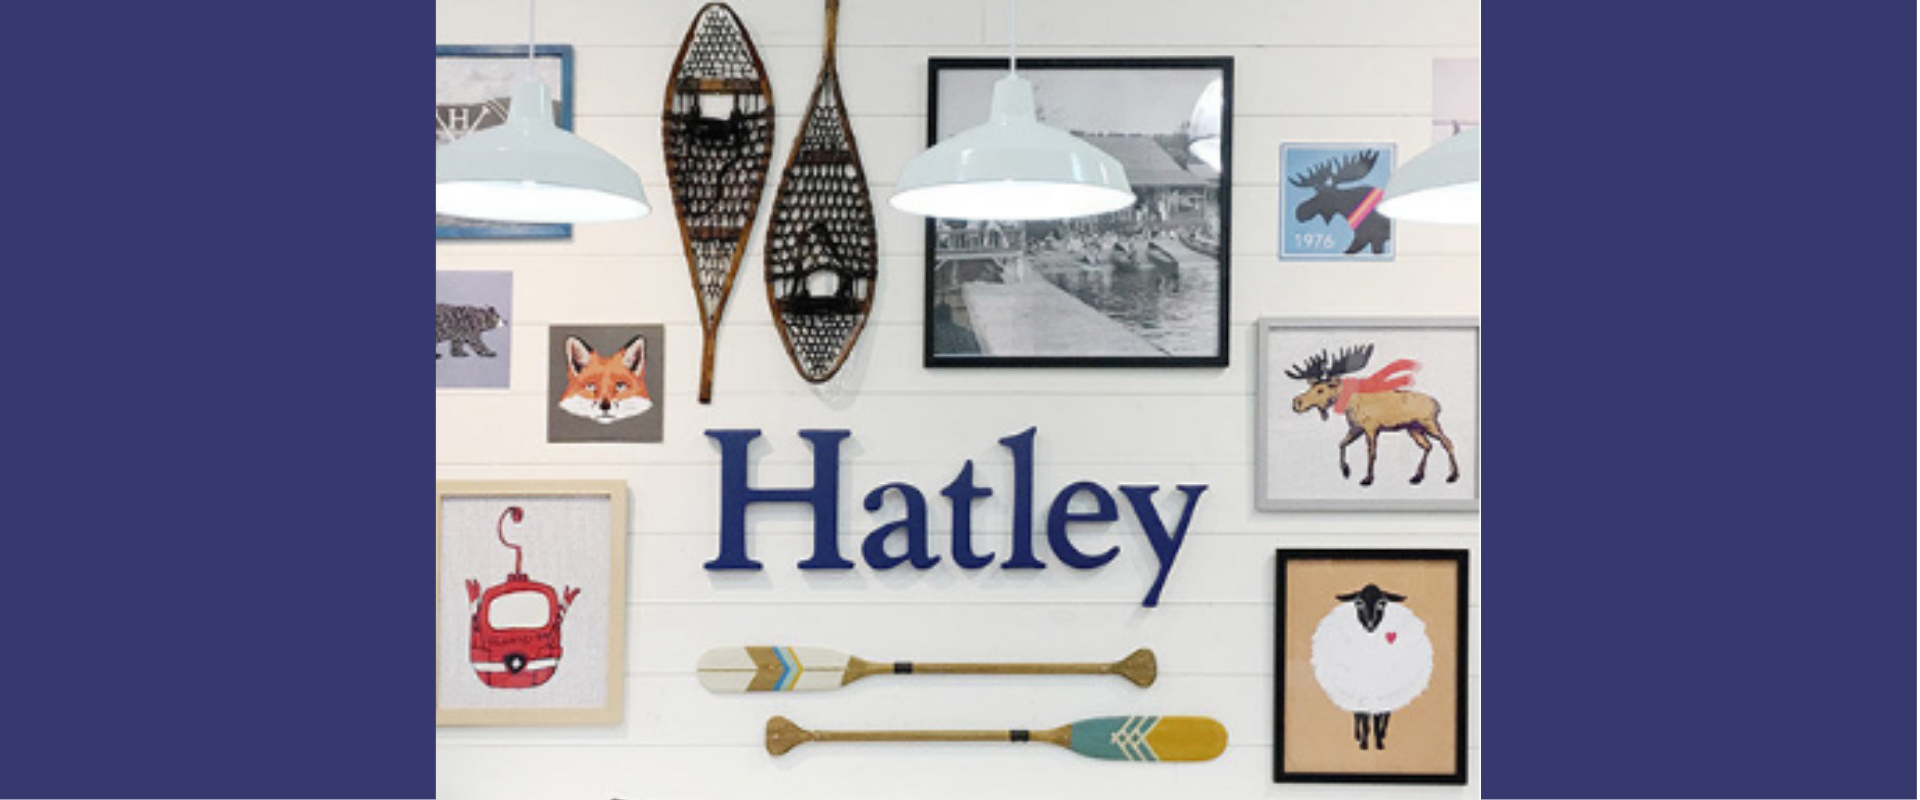 hatley-brand-banner.png